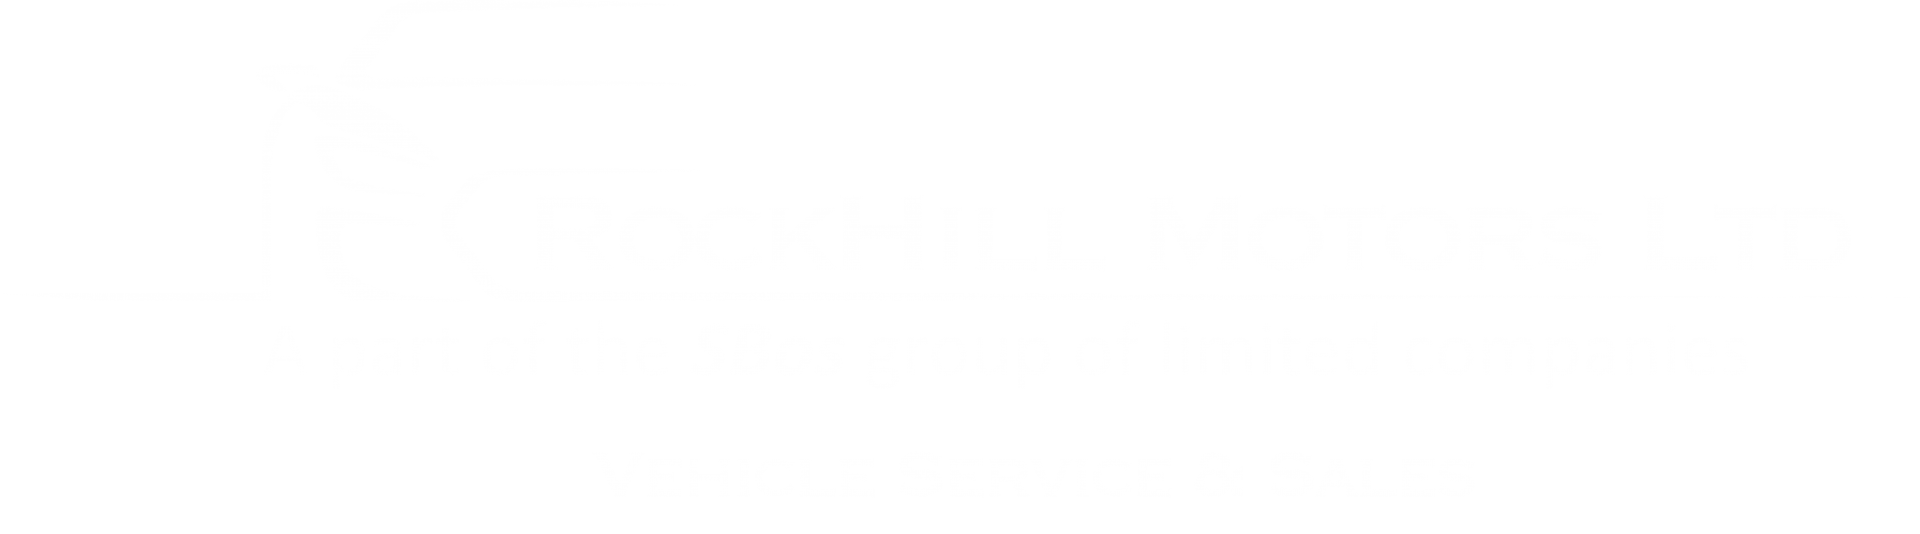 Rockhill Motors - Used Car Sales between Bristol and Bath, UK